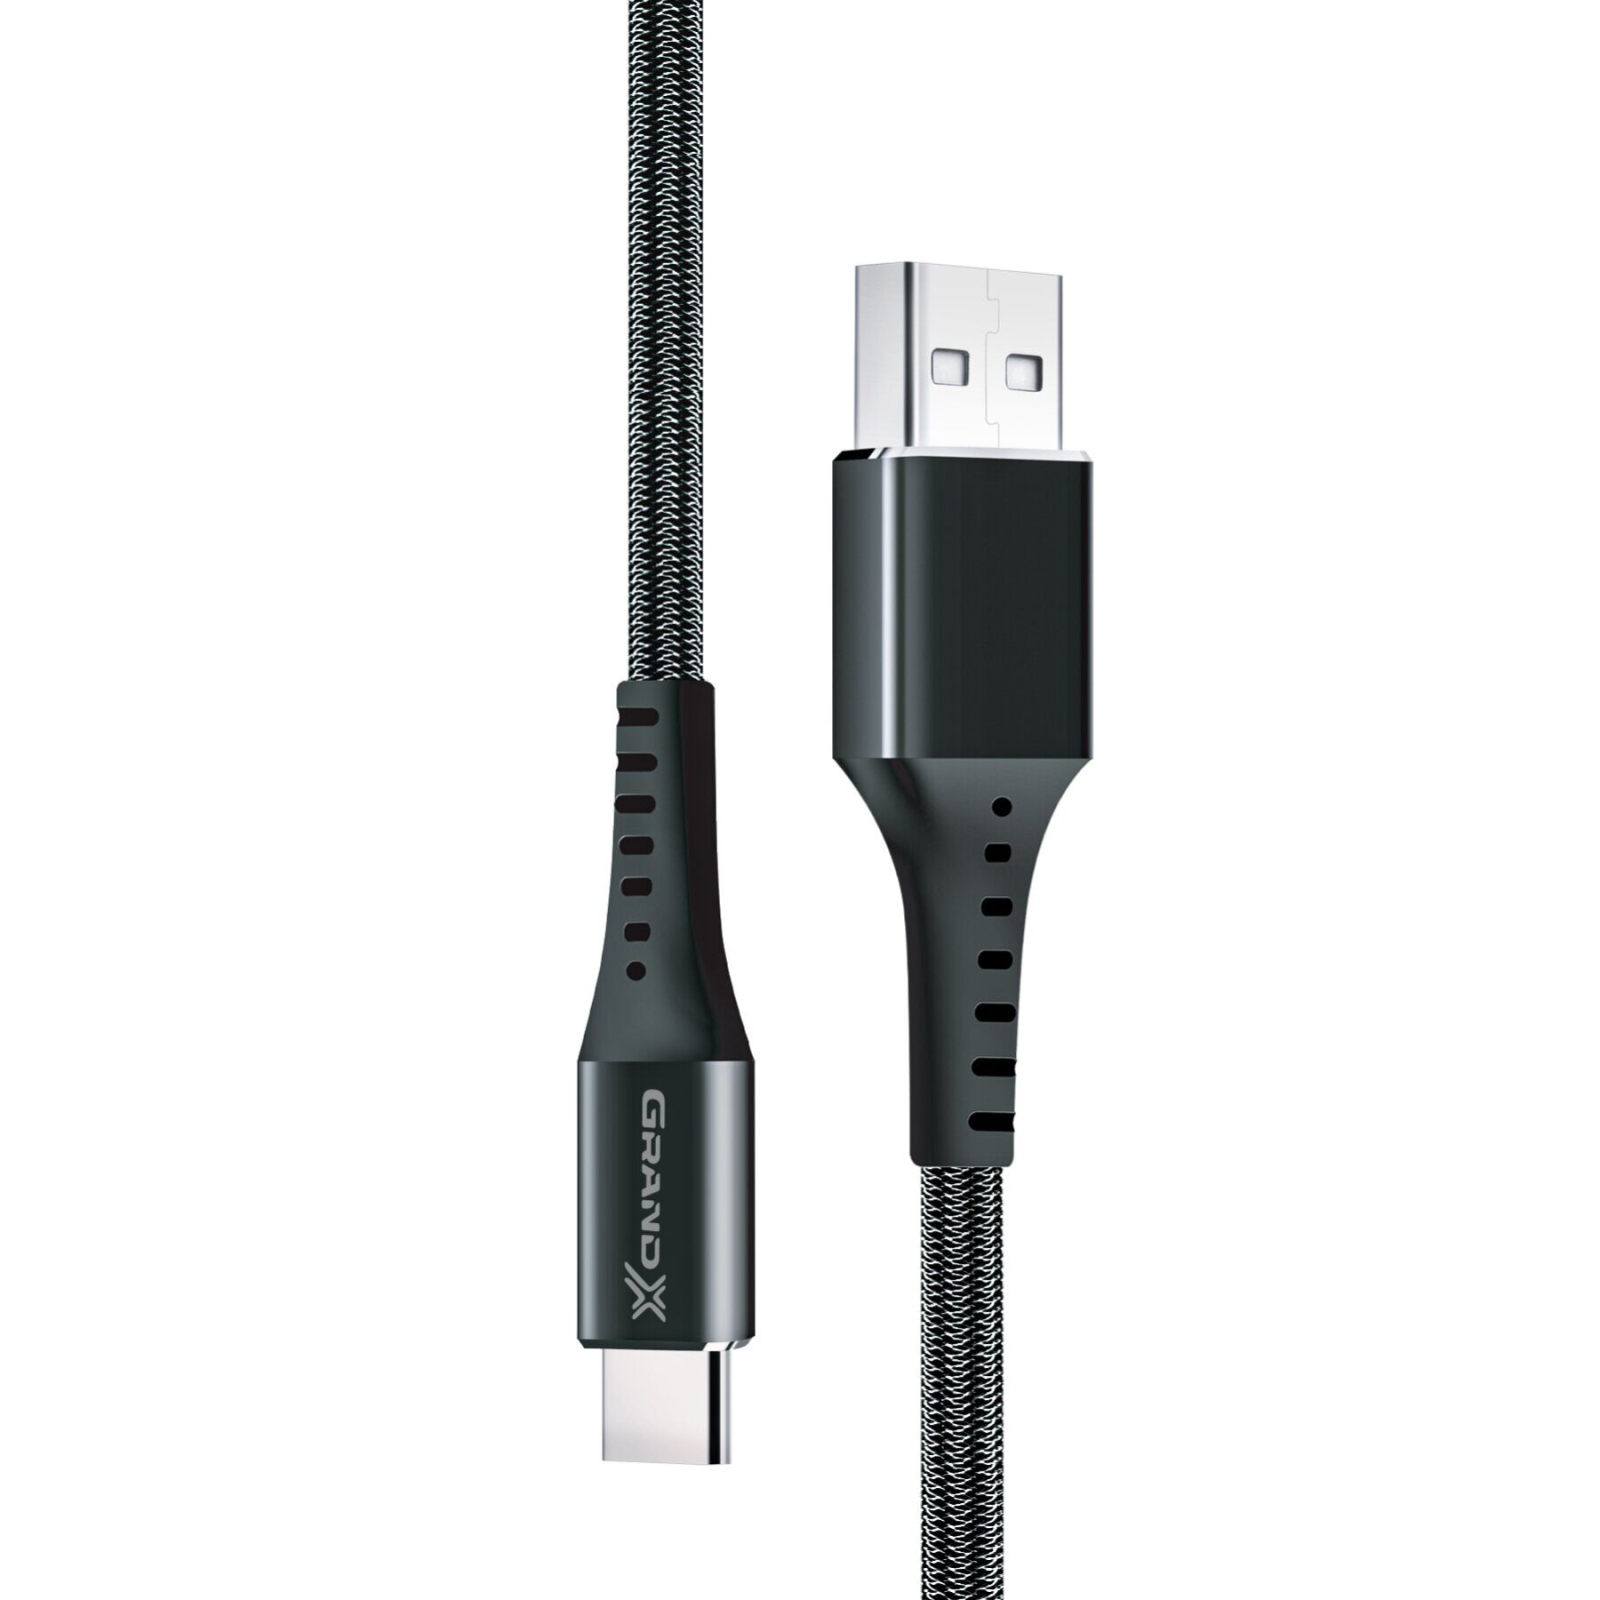 Дата кабель USB 2.0 AM to Type-C 1.2m Grey Grand-X (FC-12G)